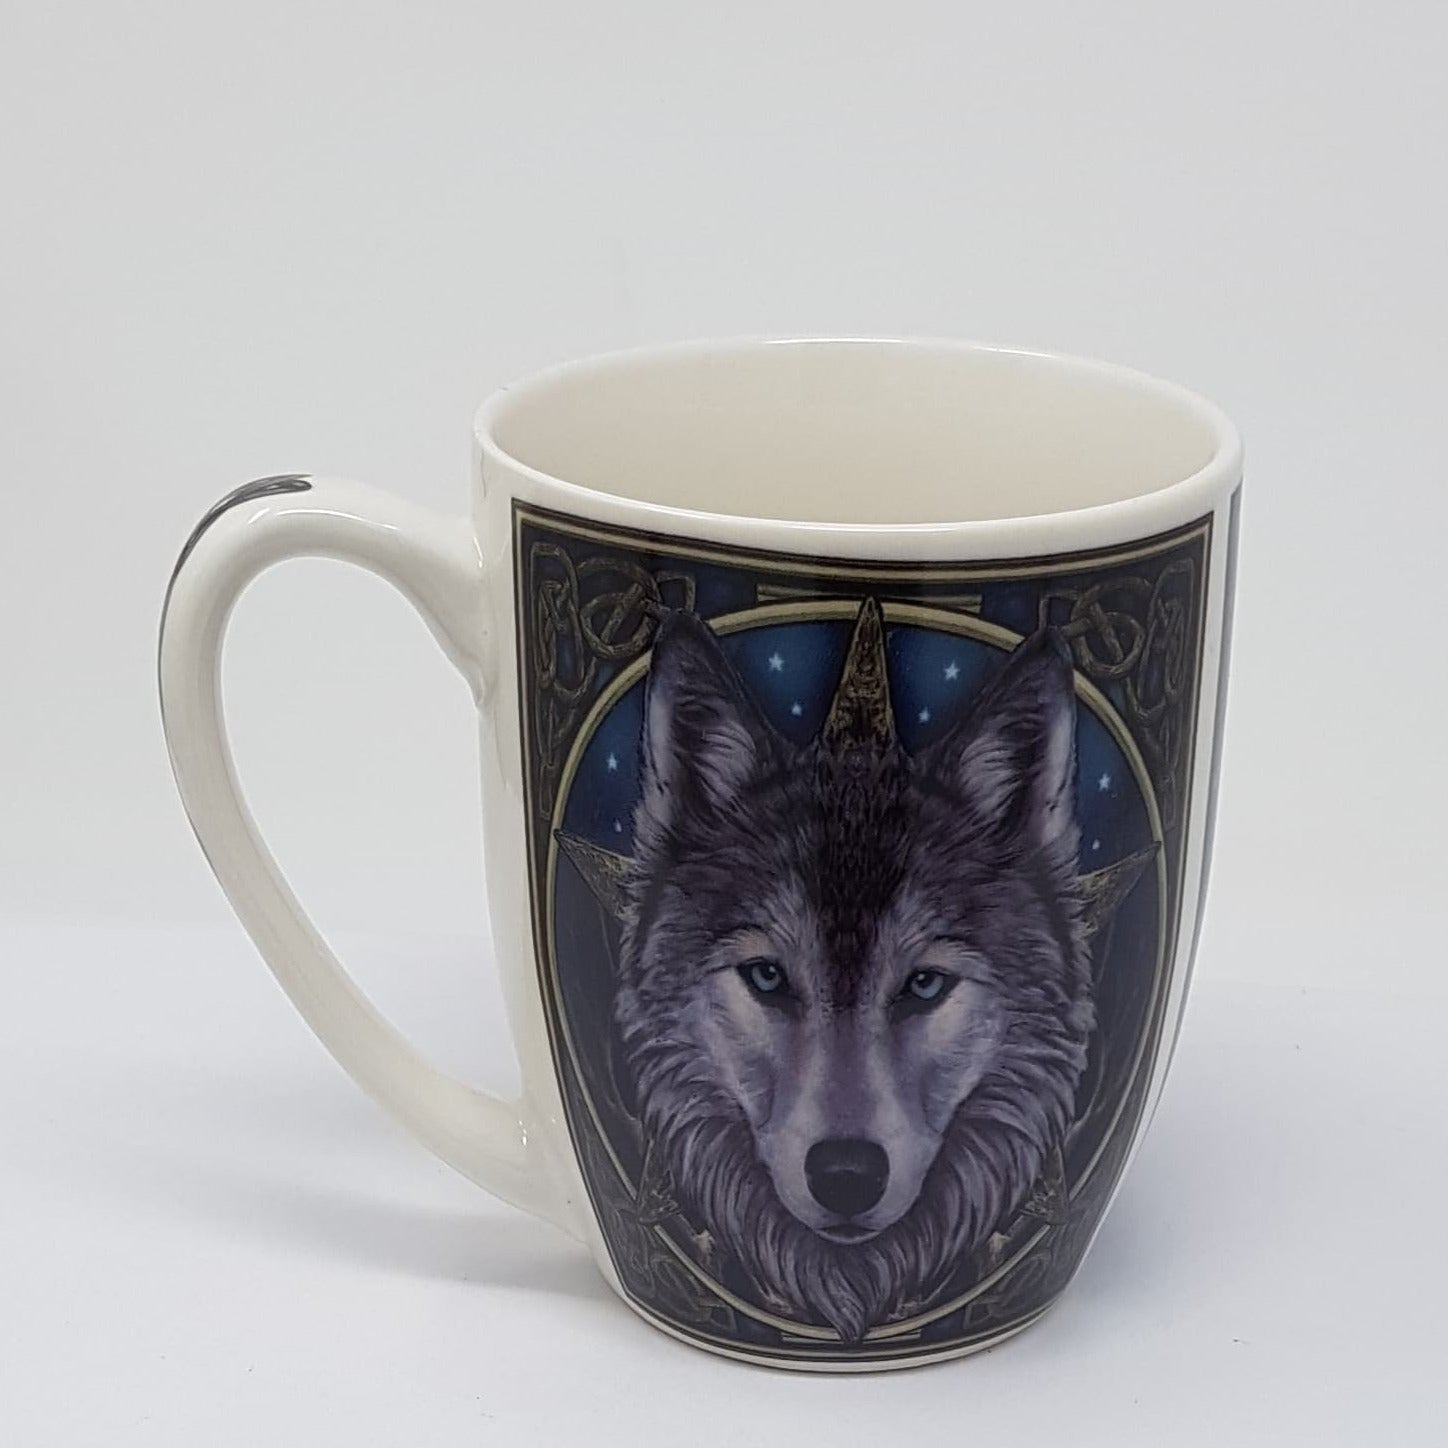 General Gift - Mug / Wolf's Face & Blue Eyes 'Forest Spirit'